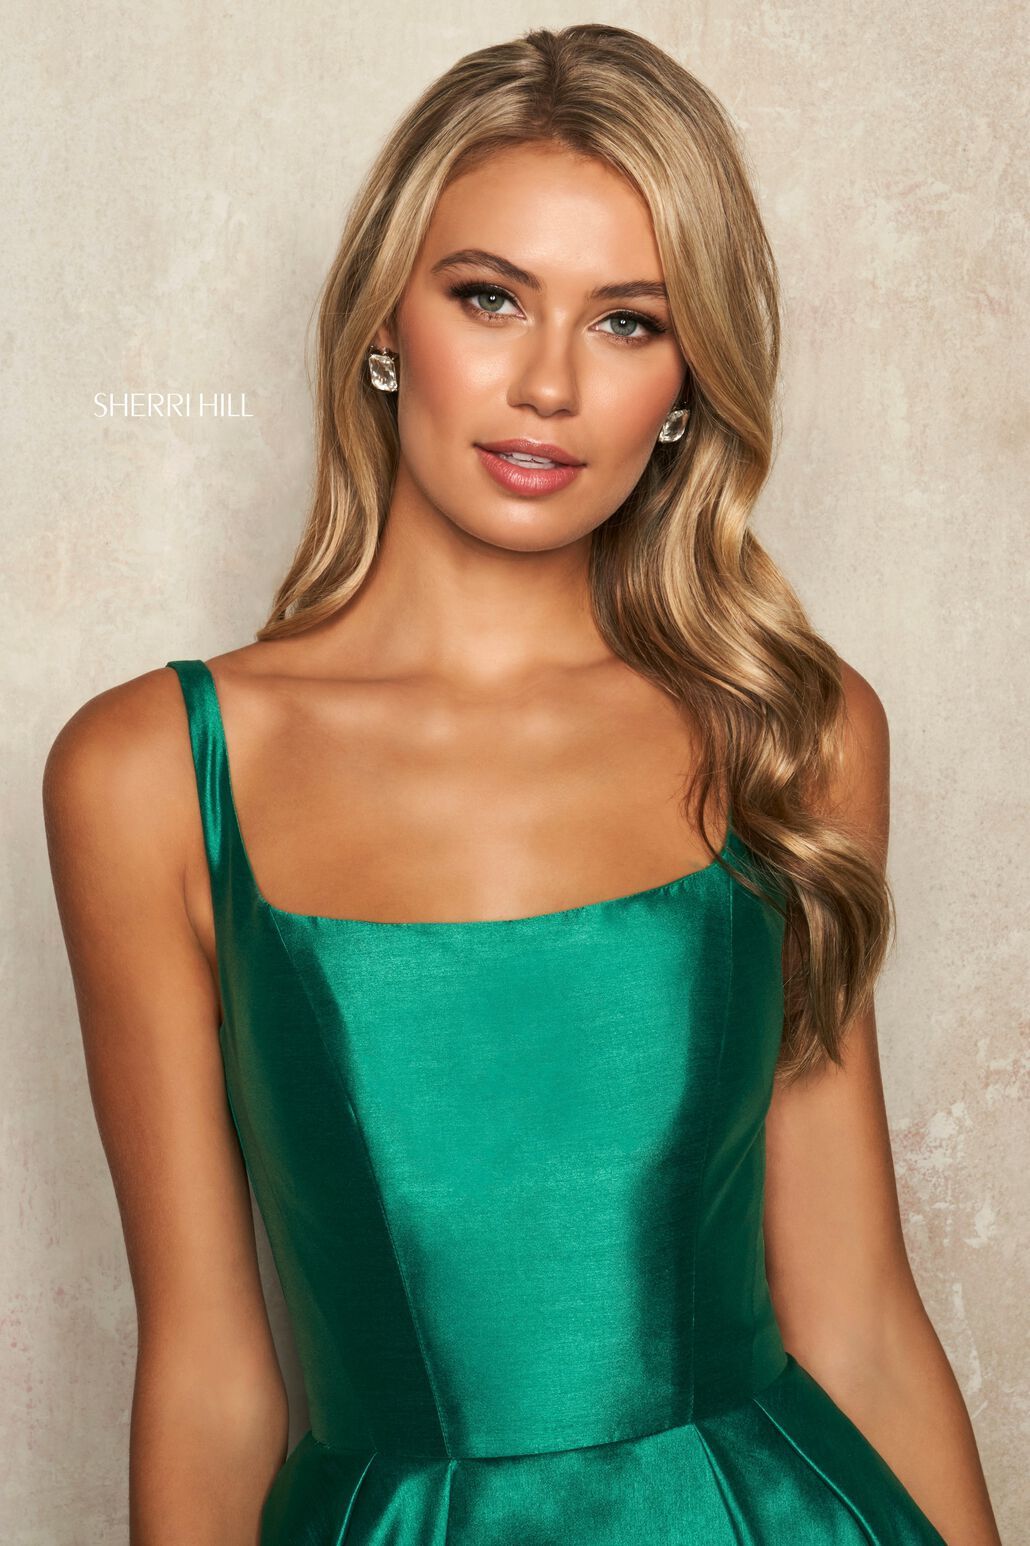 Sherri Hill 54180 emerald prom dresses image.